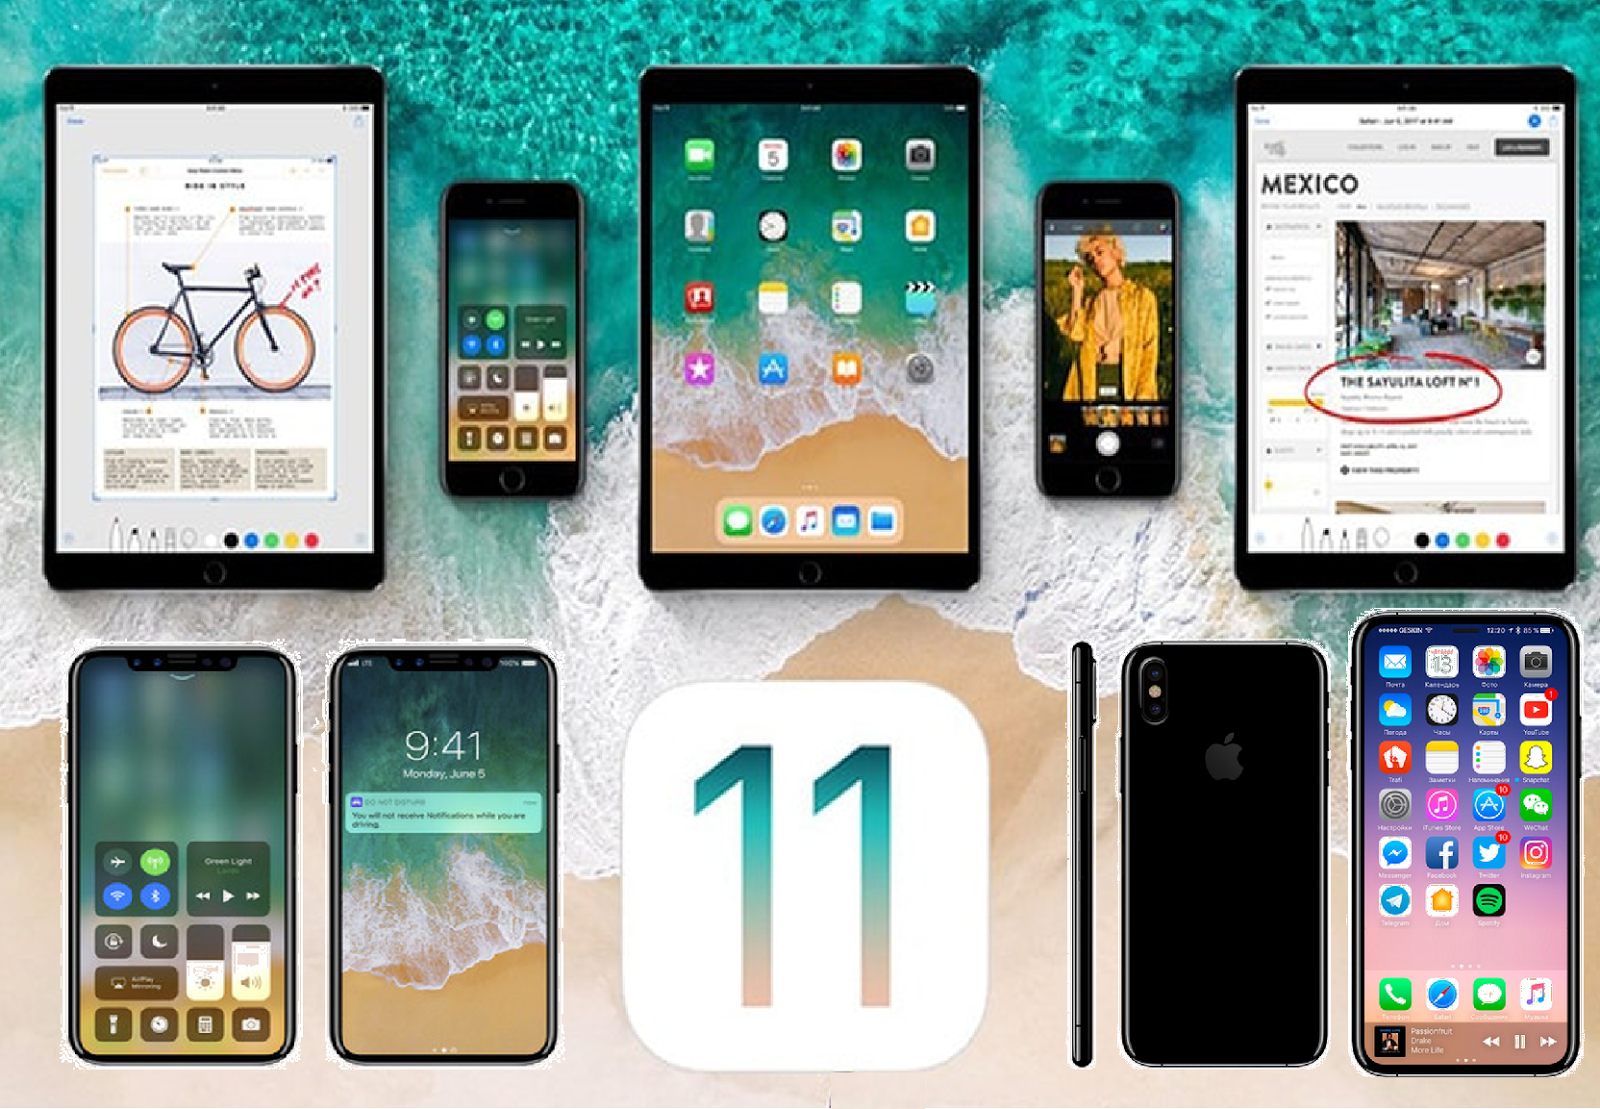 Iphone 7 Plus User Guide Pdf Download